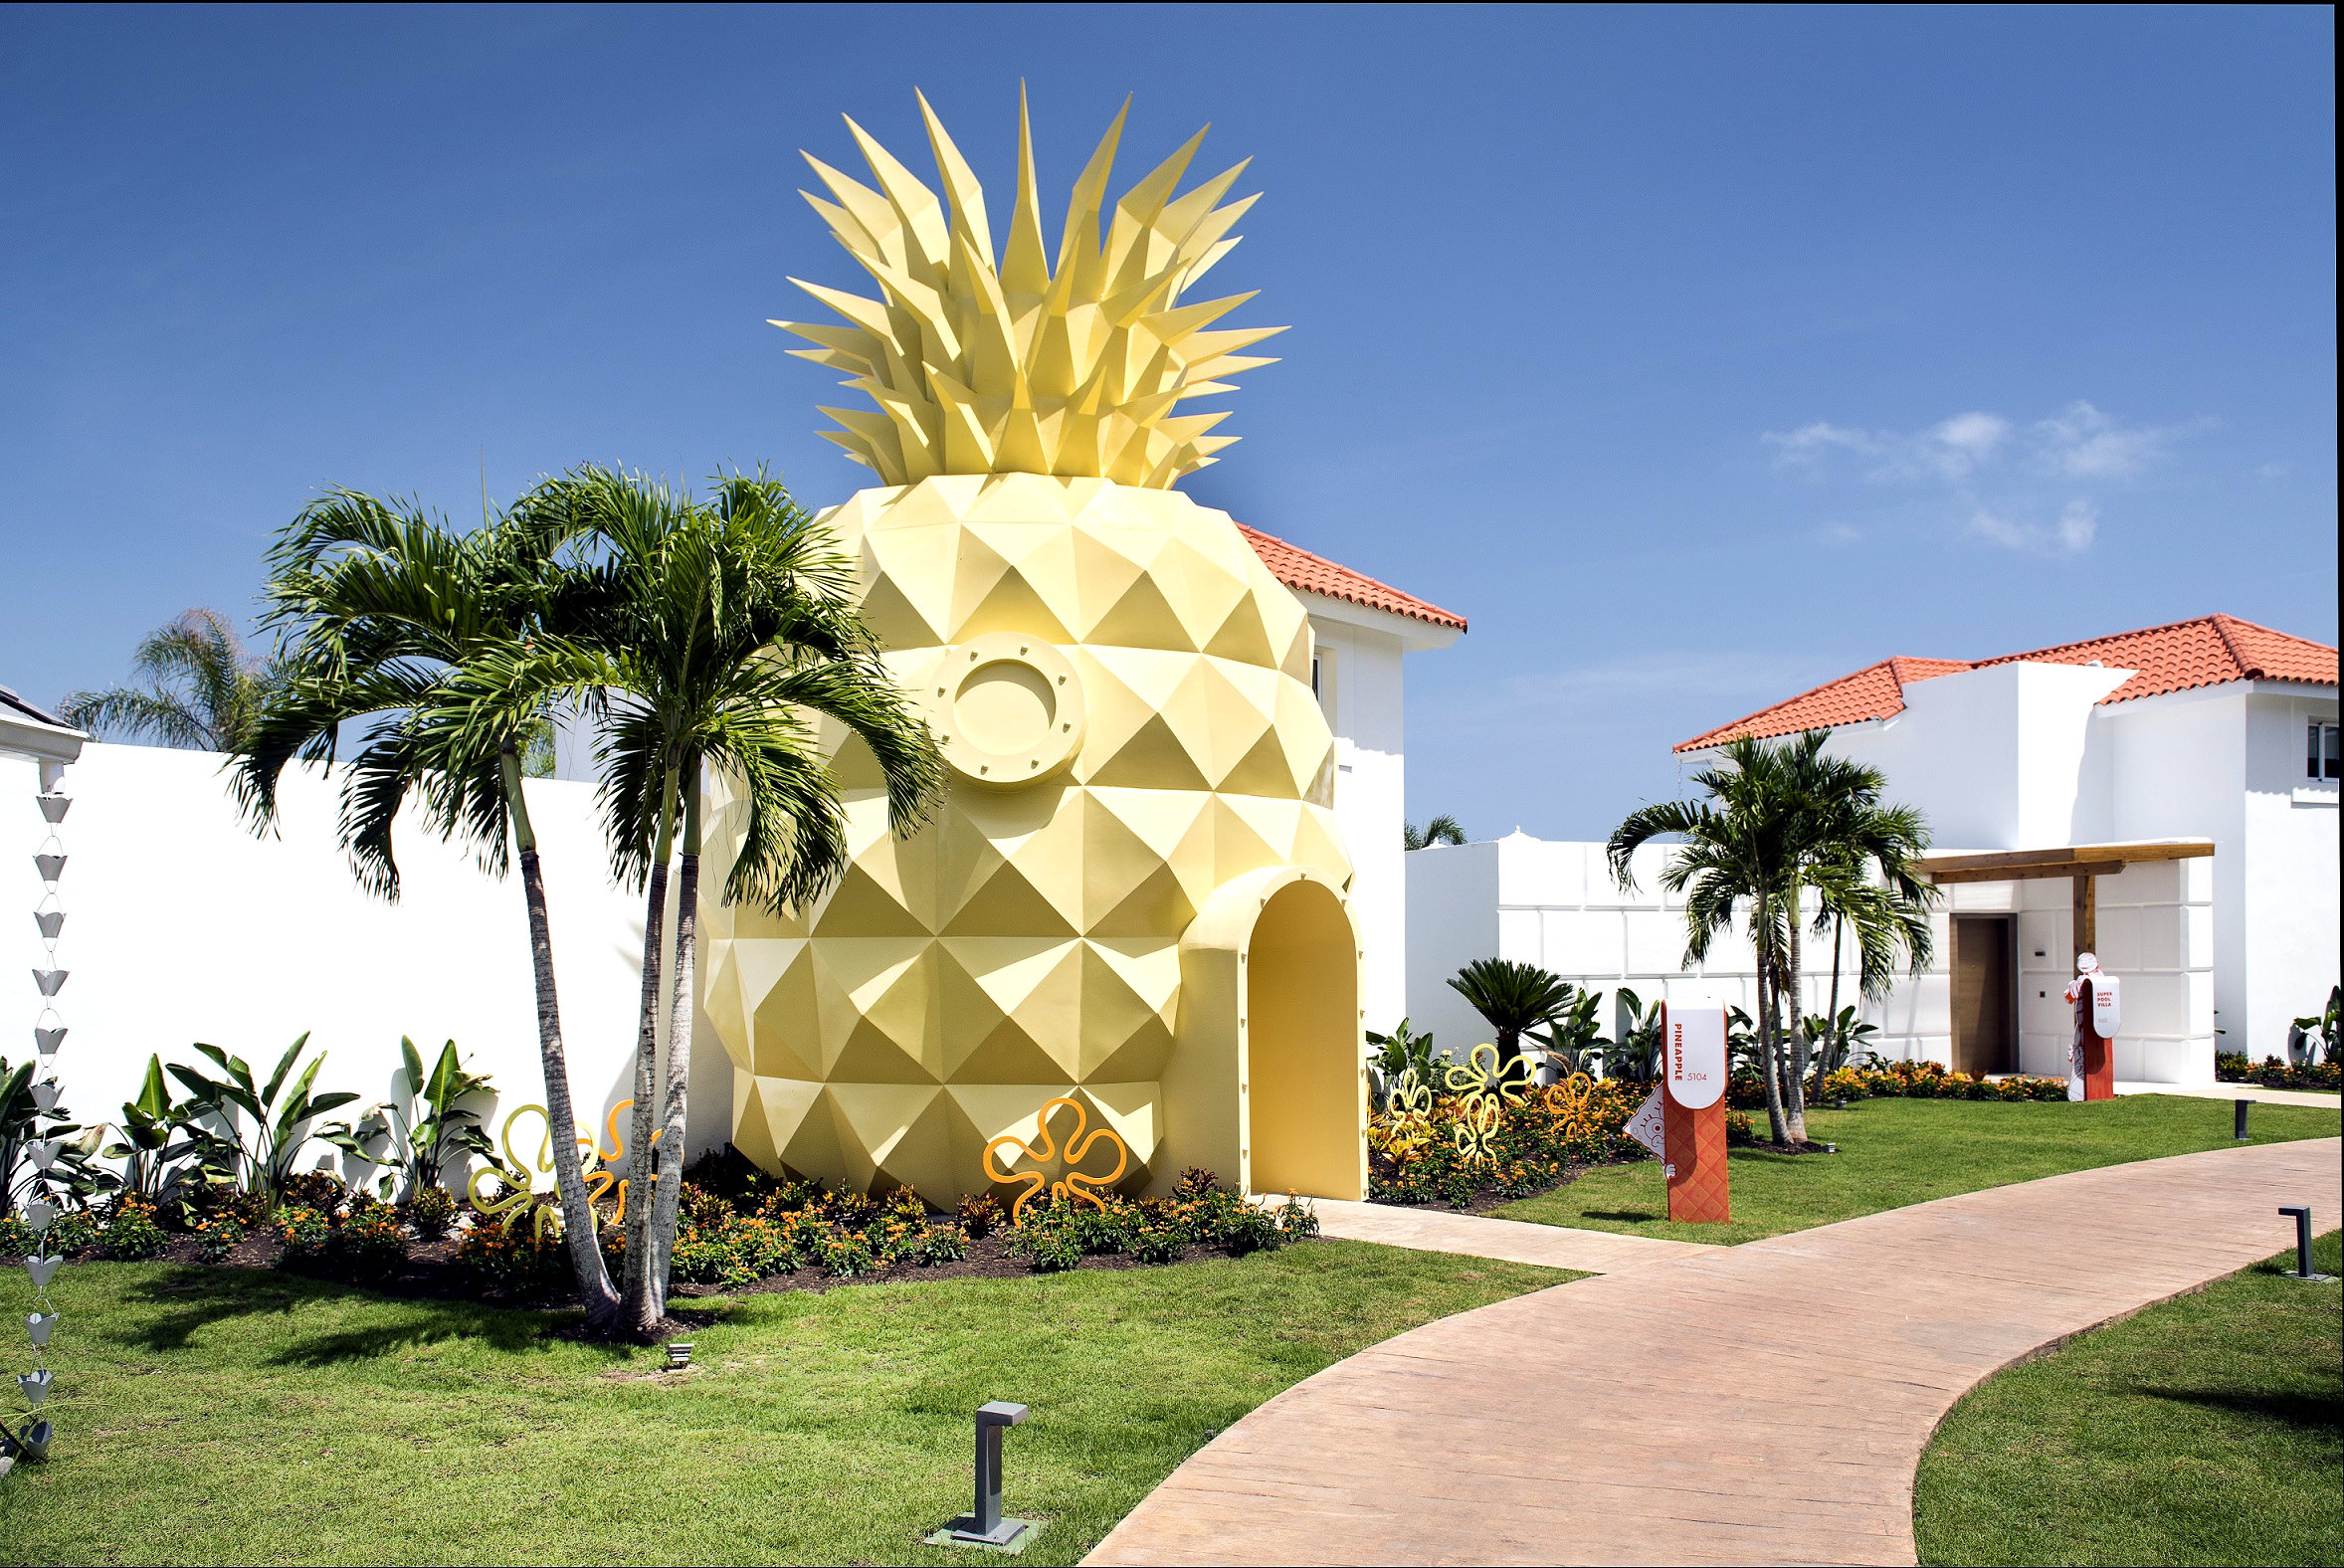 Отель Nickelodeon в Пунта-Кана (Nickelodeon Hotels & Resorts Punta Cana)